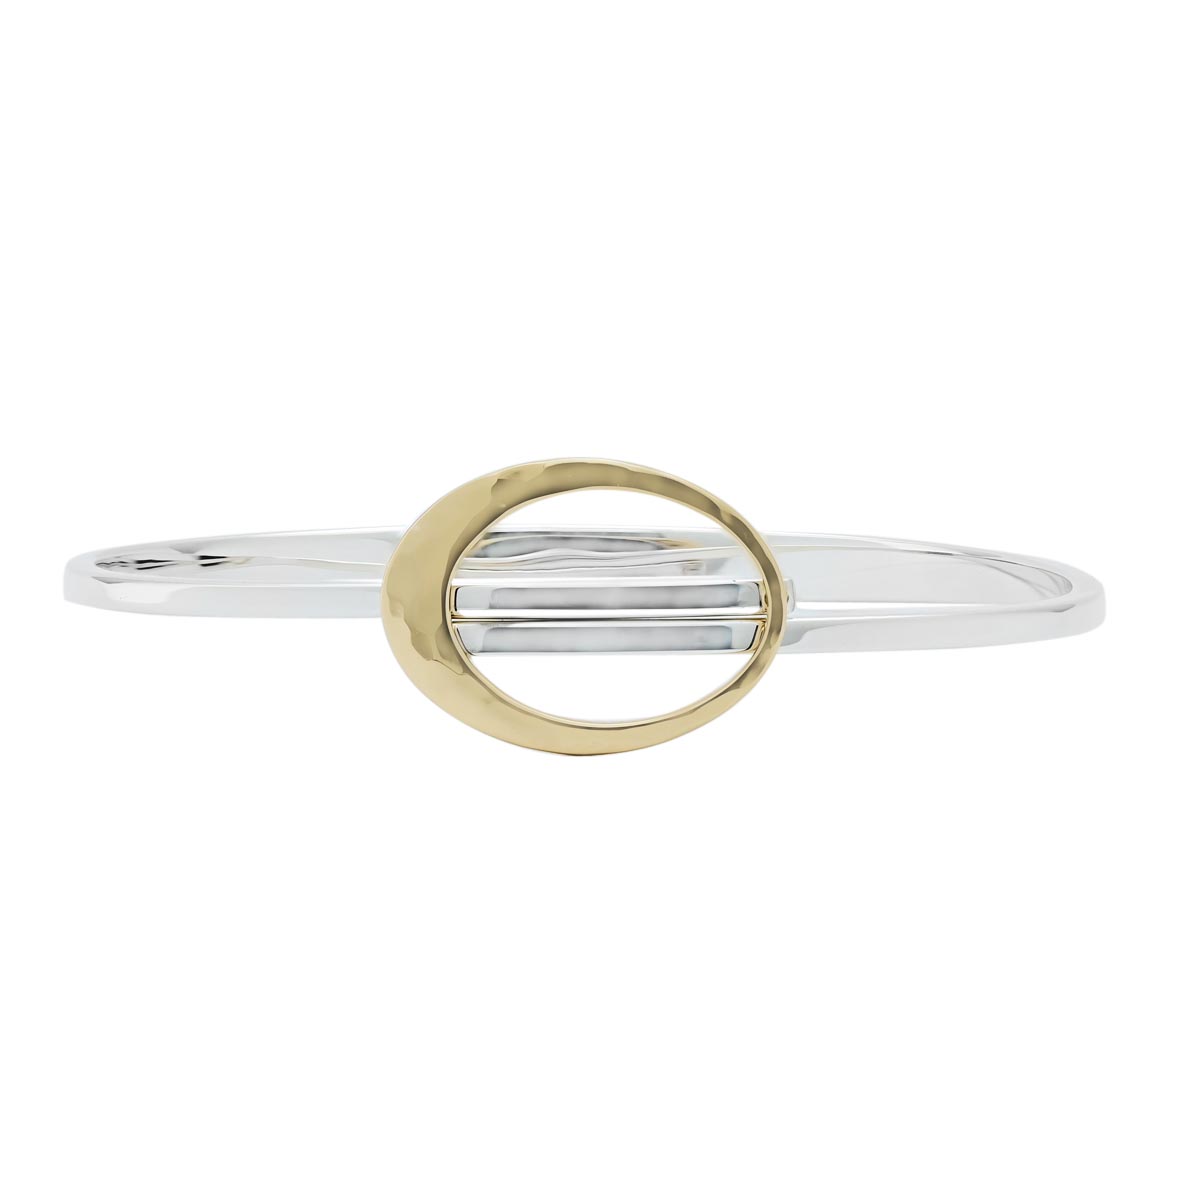 E.L Designs Elliptical Elegance Bracelet in Sterling Silver and 14kt Yellow Gold